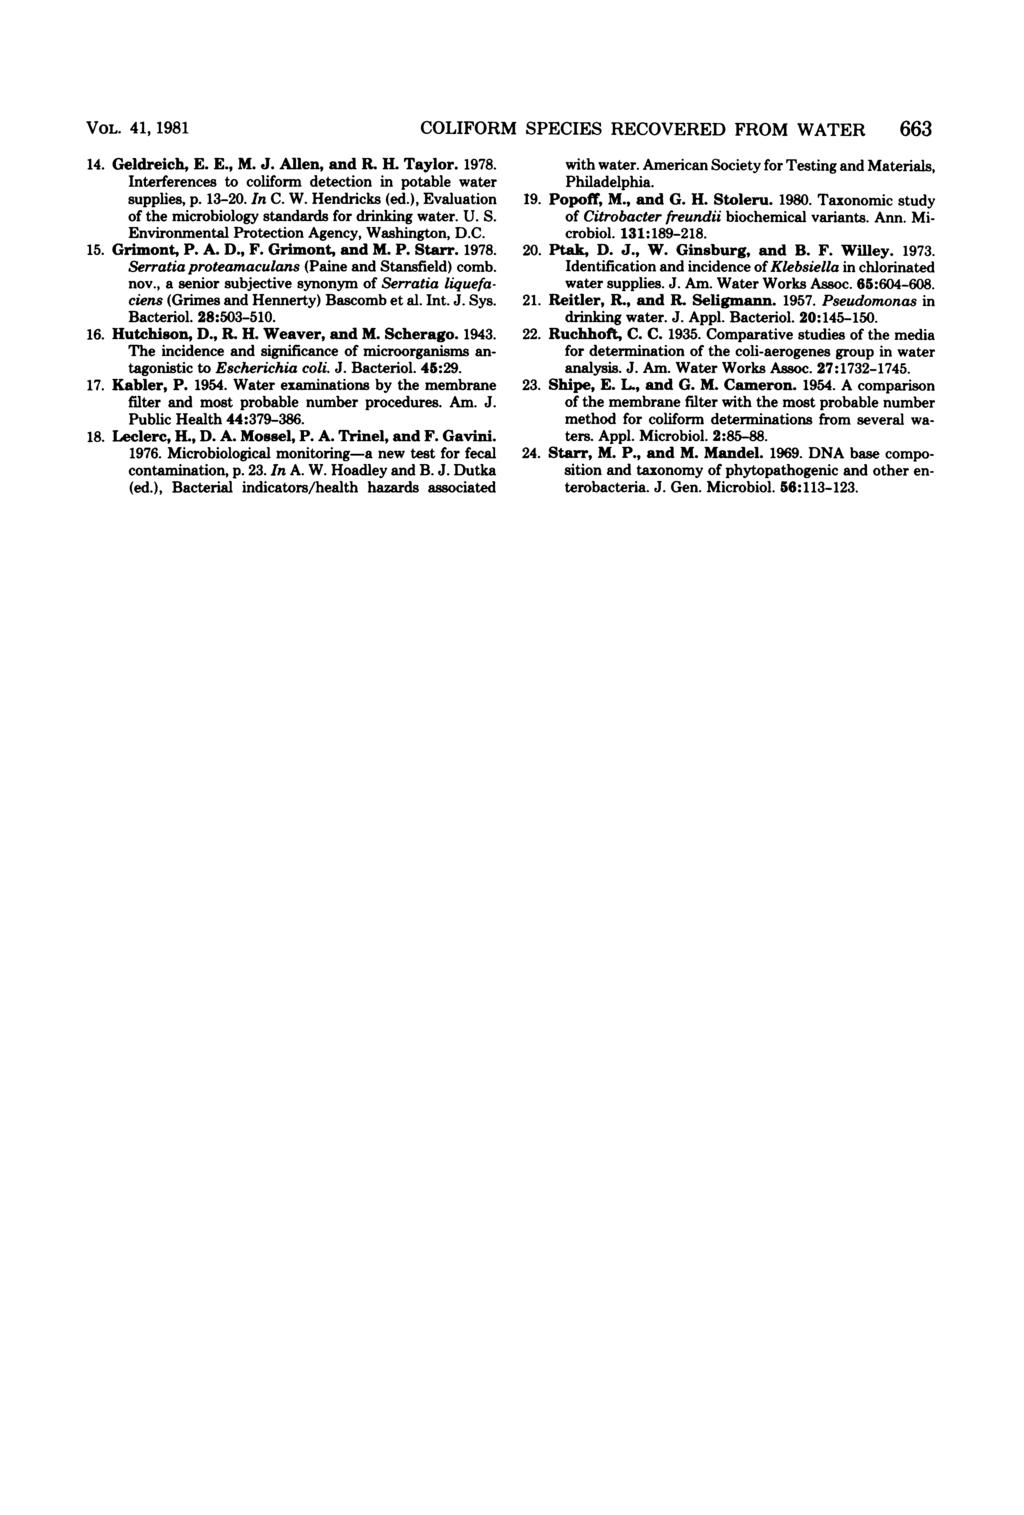 VOL. 41, 1981 14. Geldreich, E. E., M. J. Allen, and R. H. Taylor. 1978. Interferences to coliform detection in potable water supplies, p. 13-20. In C. W. Hendricks (ed.